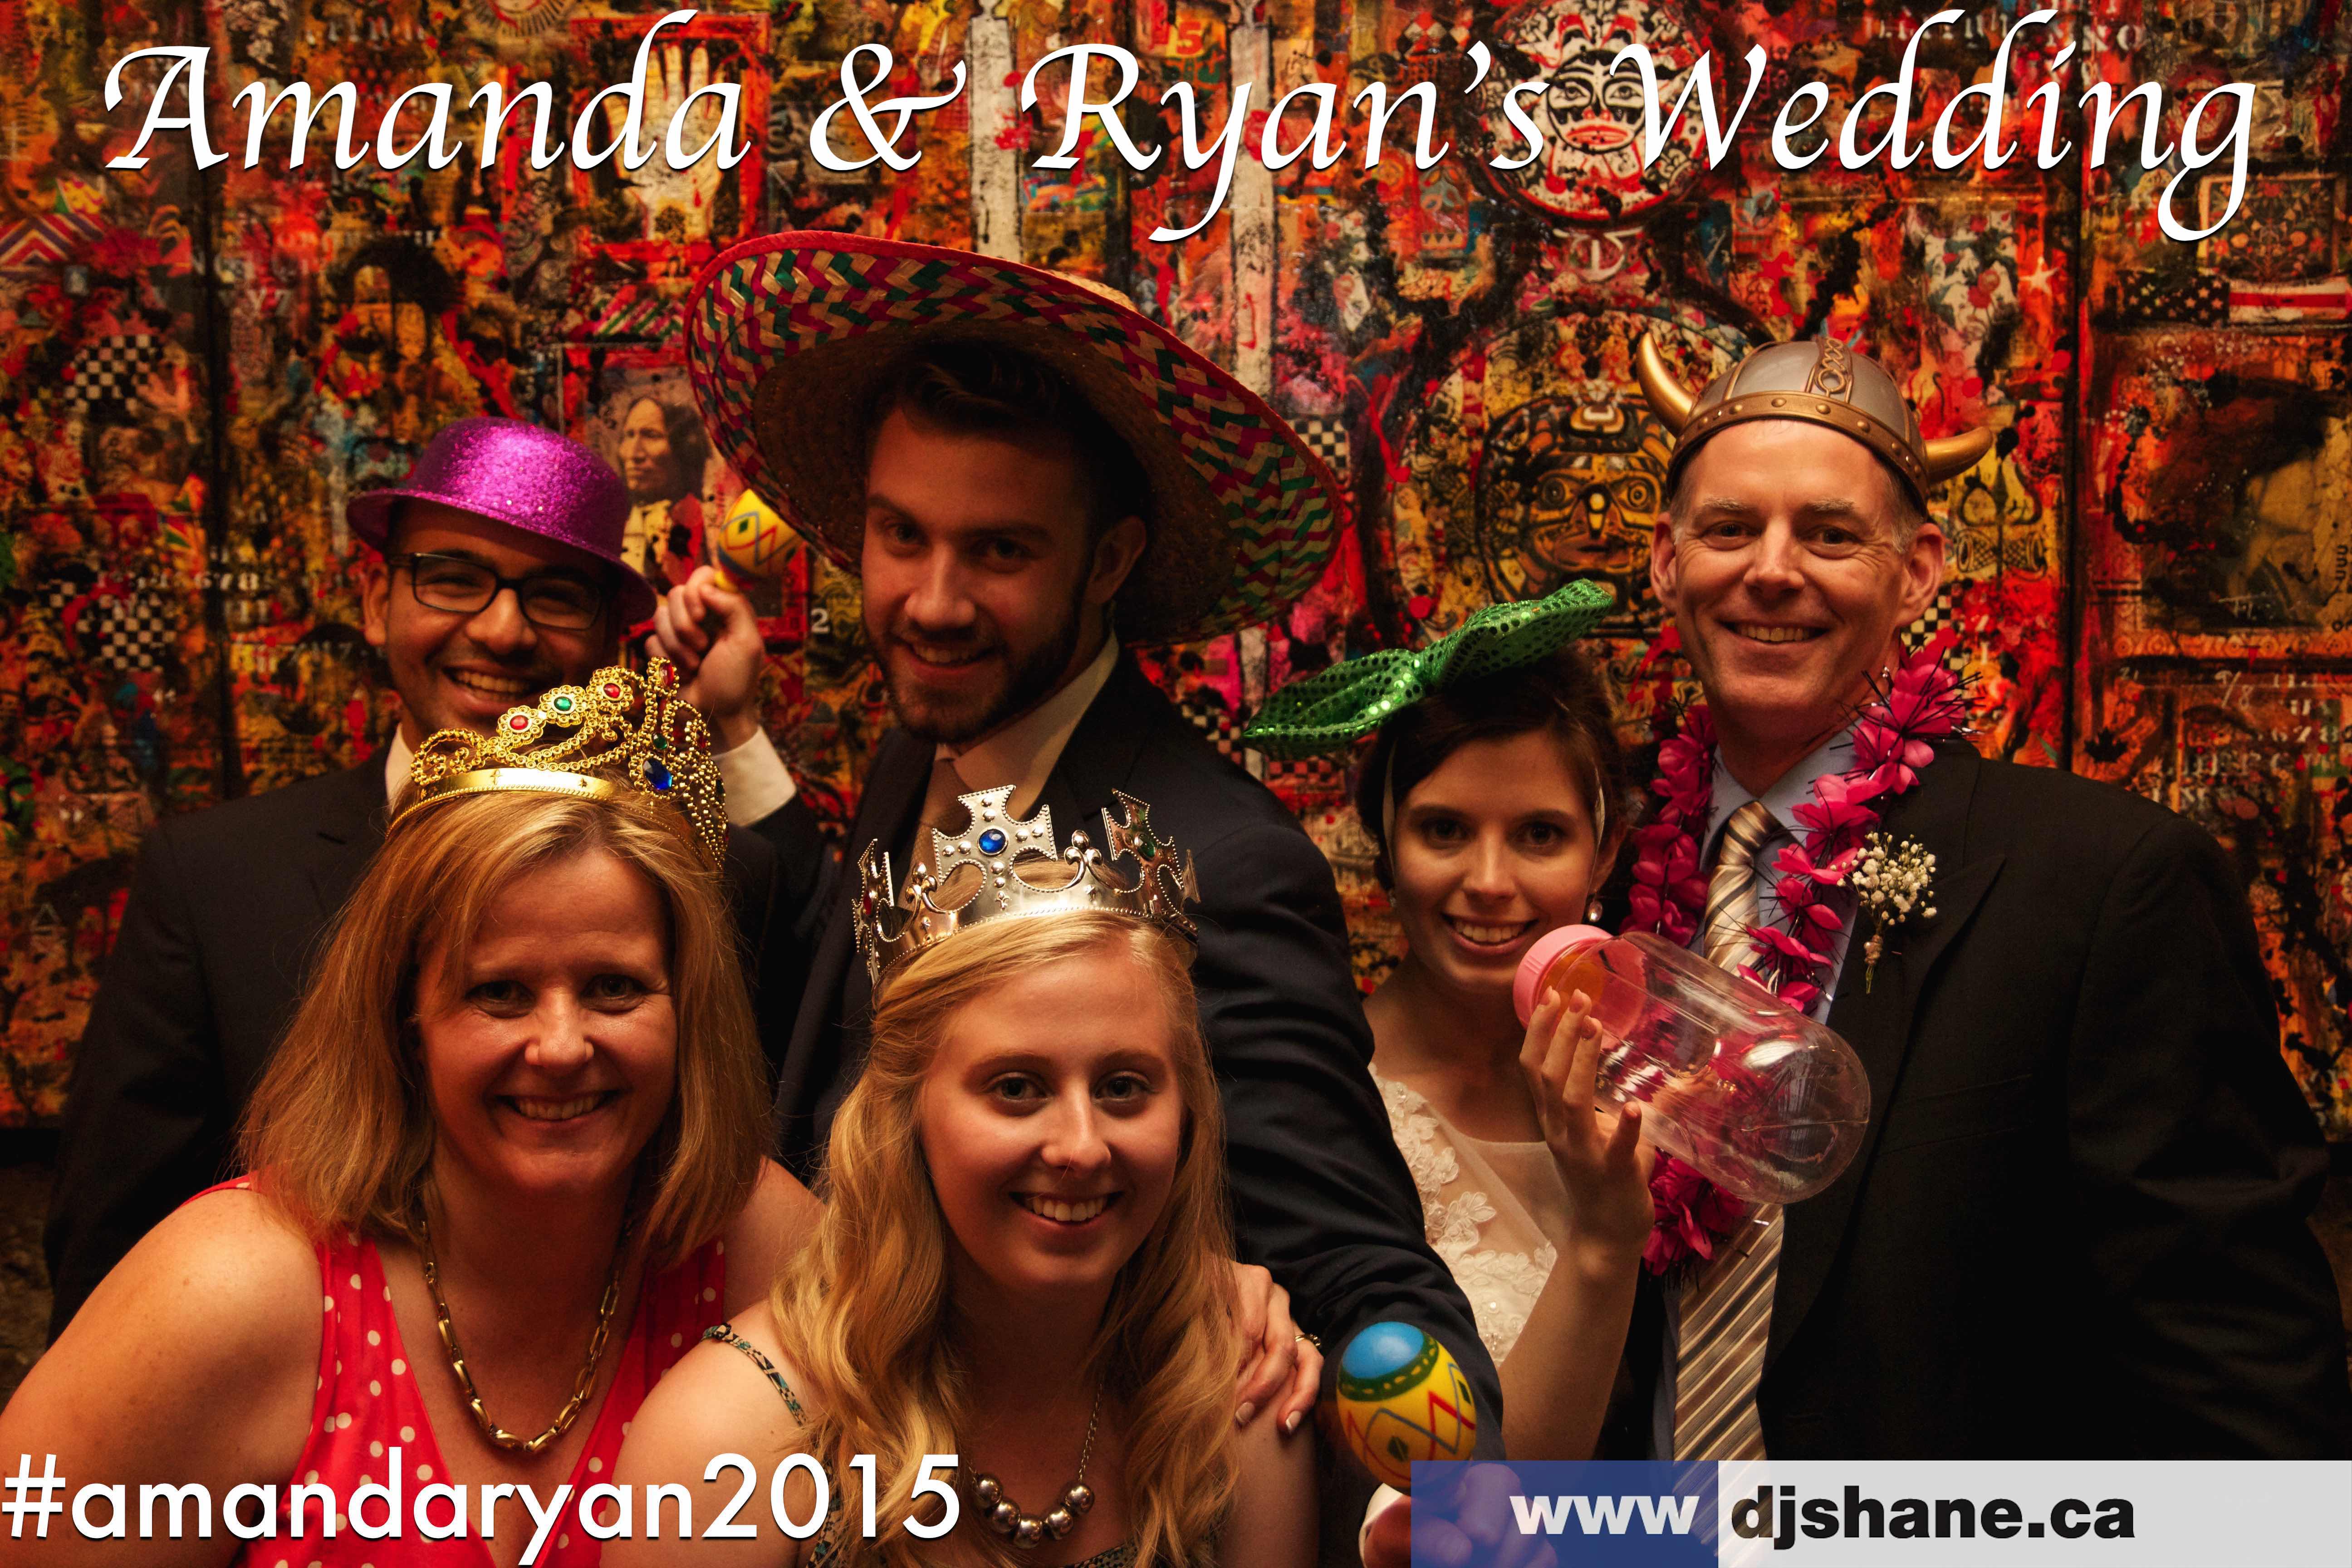 Amanda & Ryan’s Wedding Photo Booth Photos @ Auberge St. Gabriel #amandaryan2015